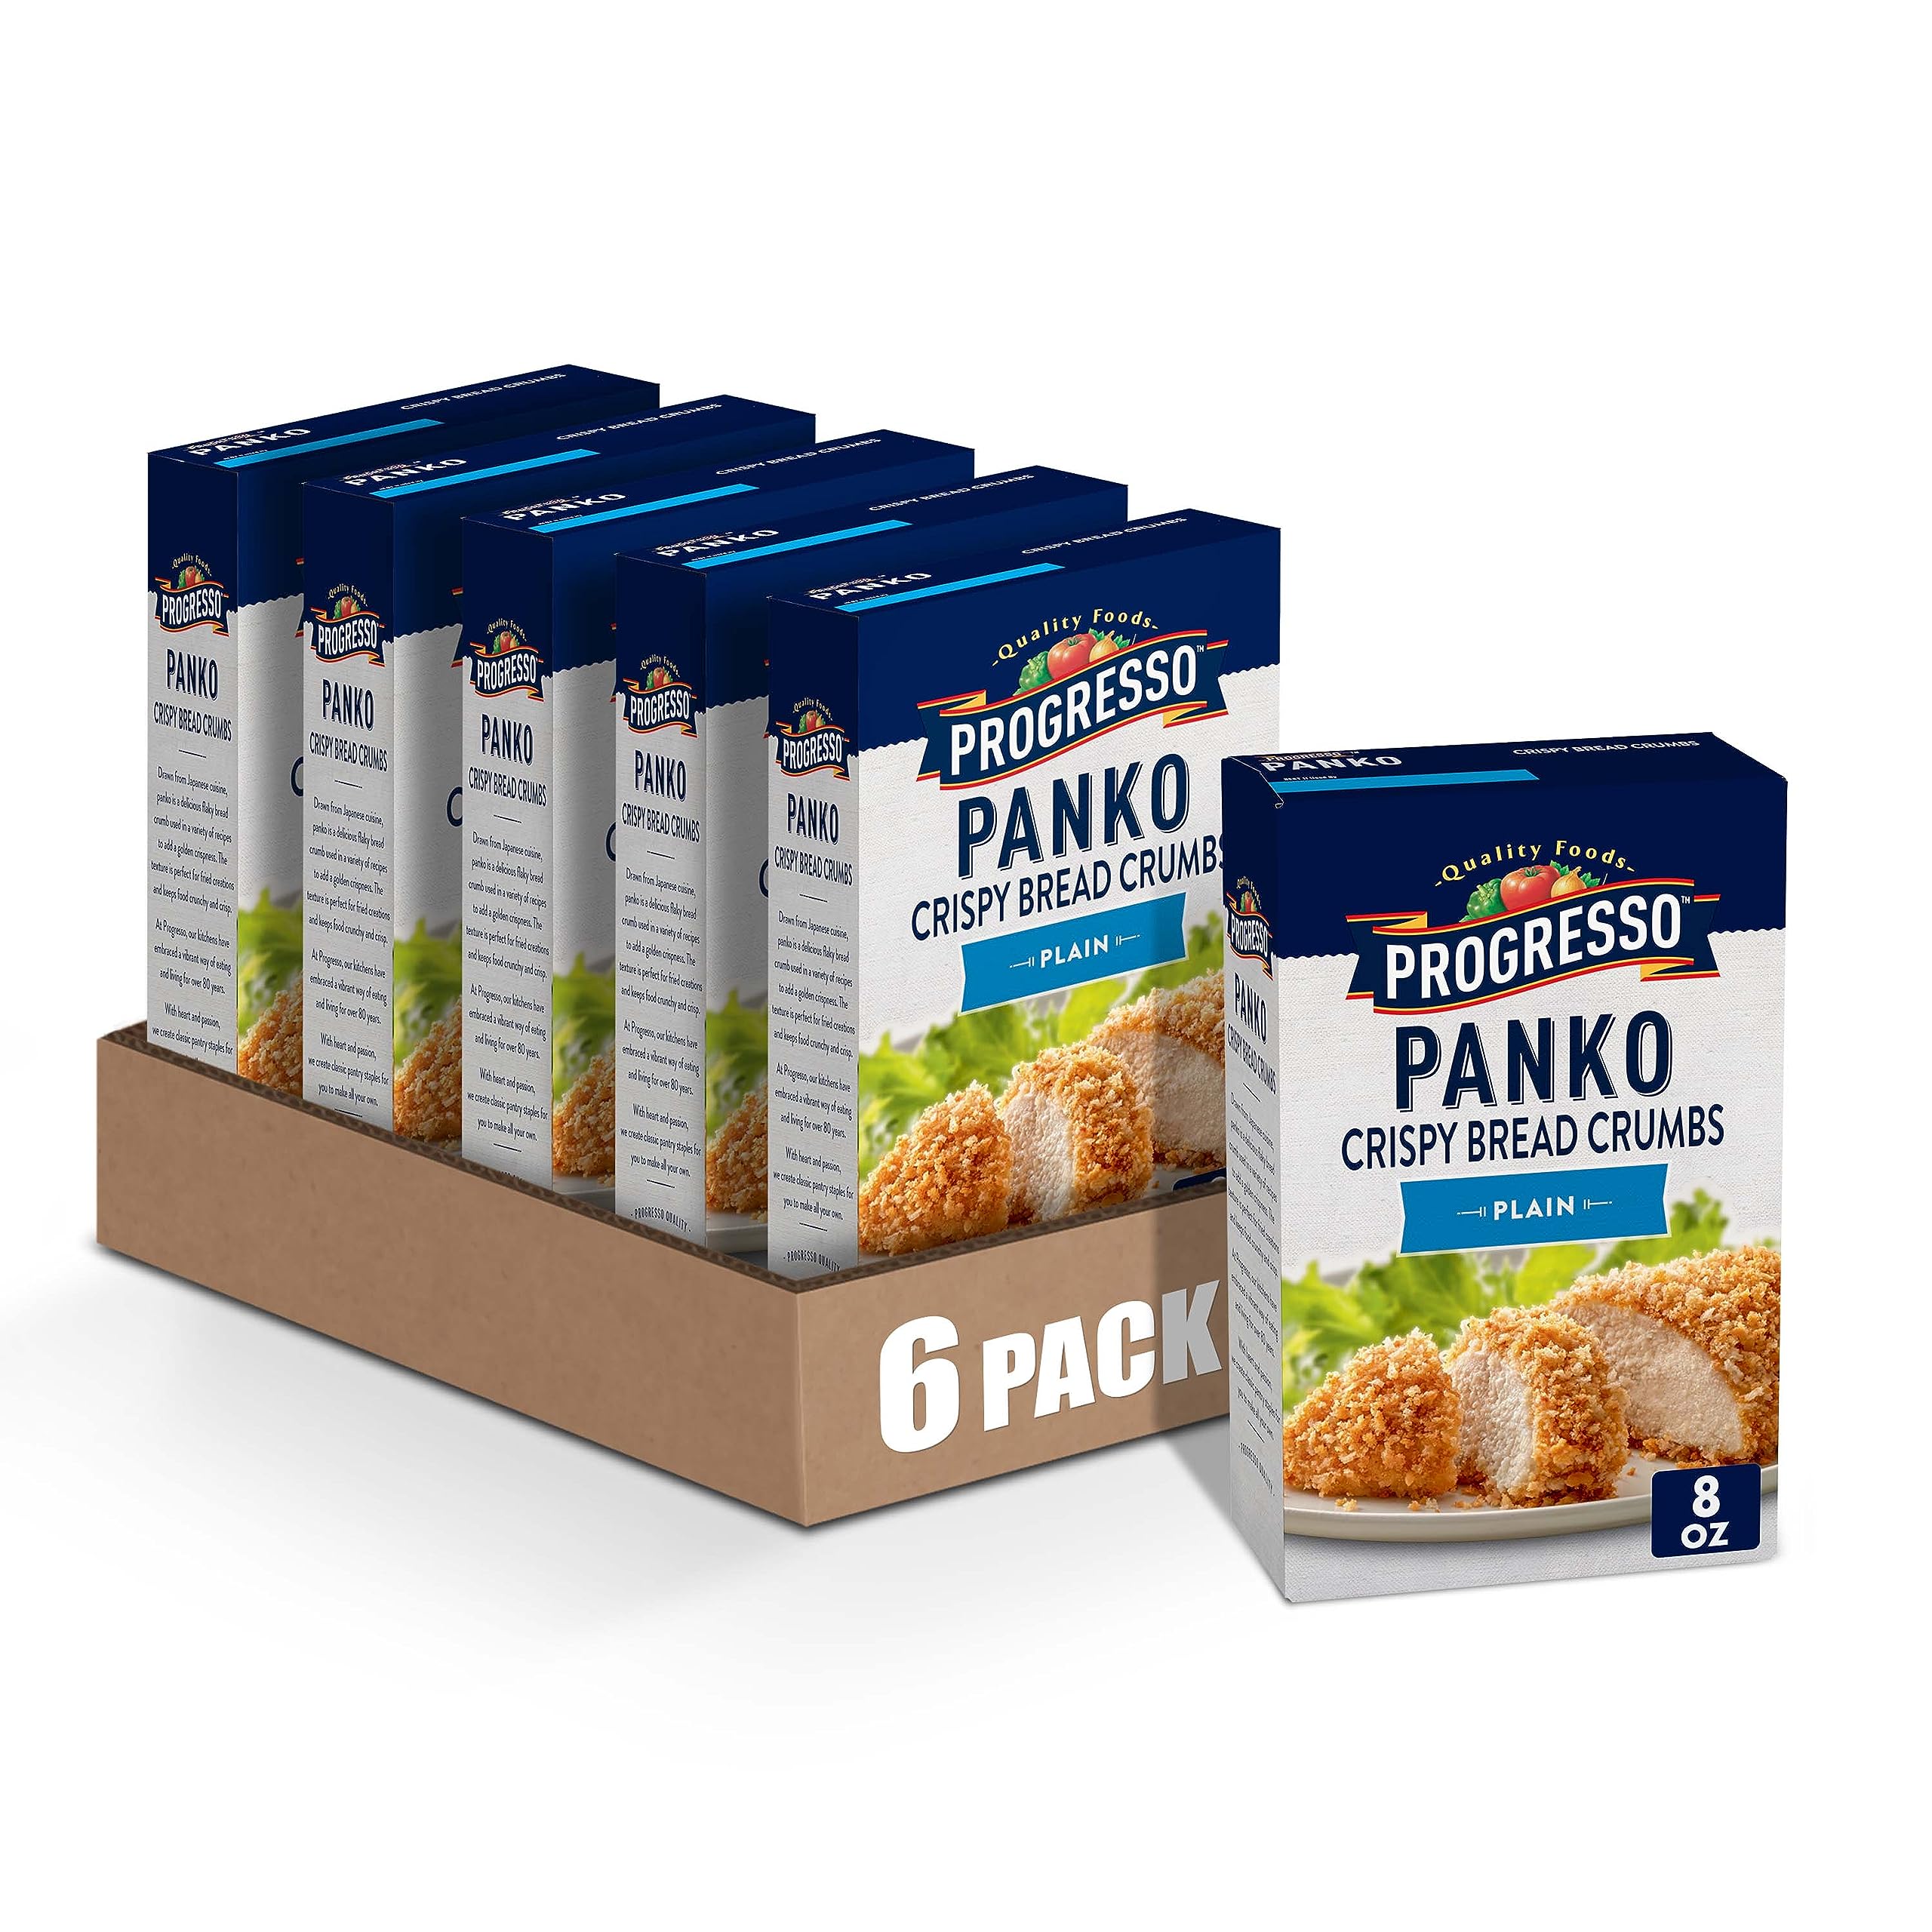 6-Pack 8-Oz Progresso Panko Crispy Bread Crumbs (Plain) $9.37 w/ S&S + Free Shipping w/ Prime or on orders over $35